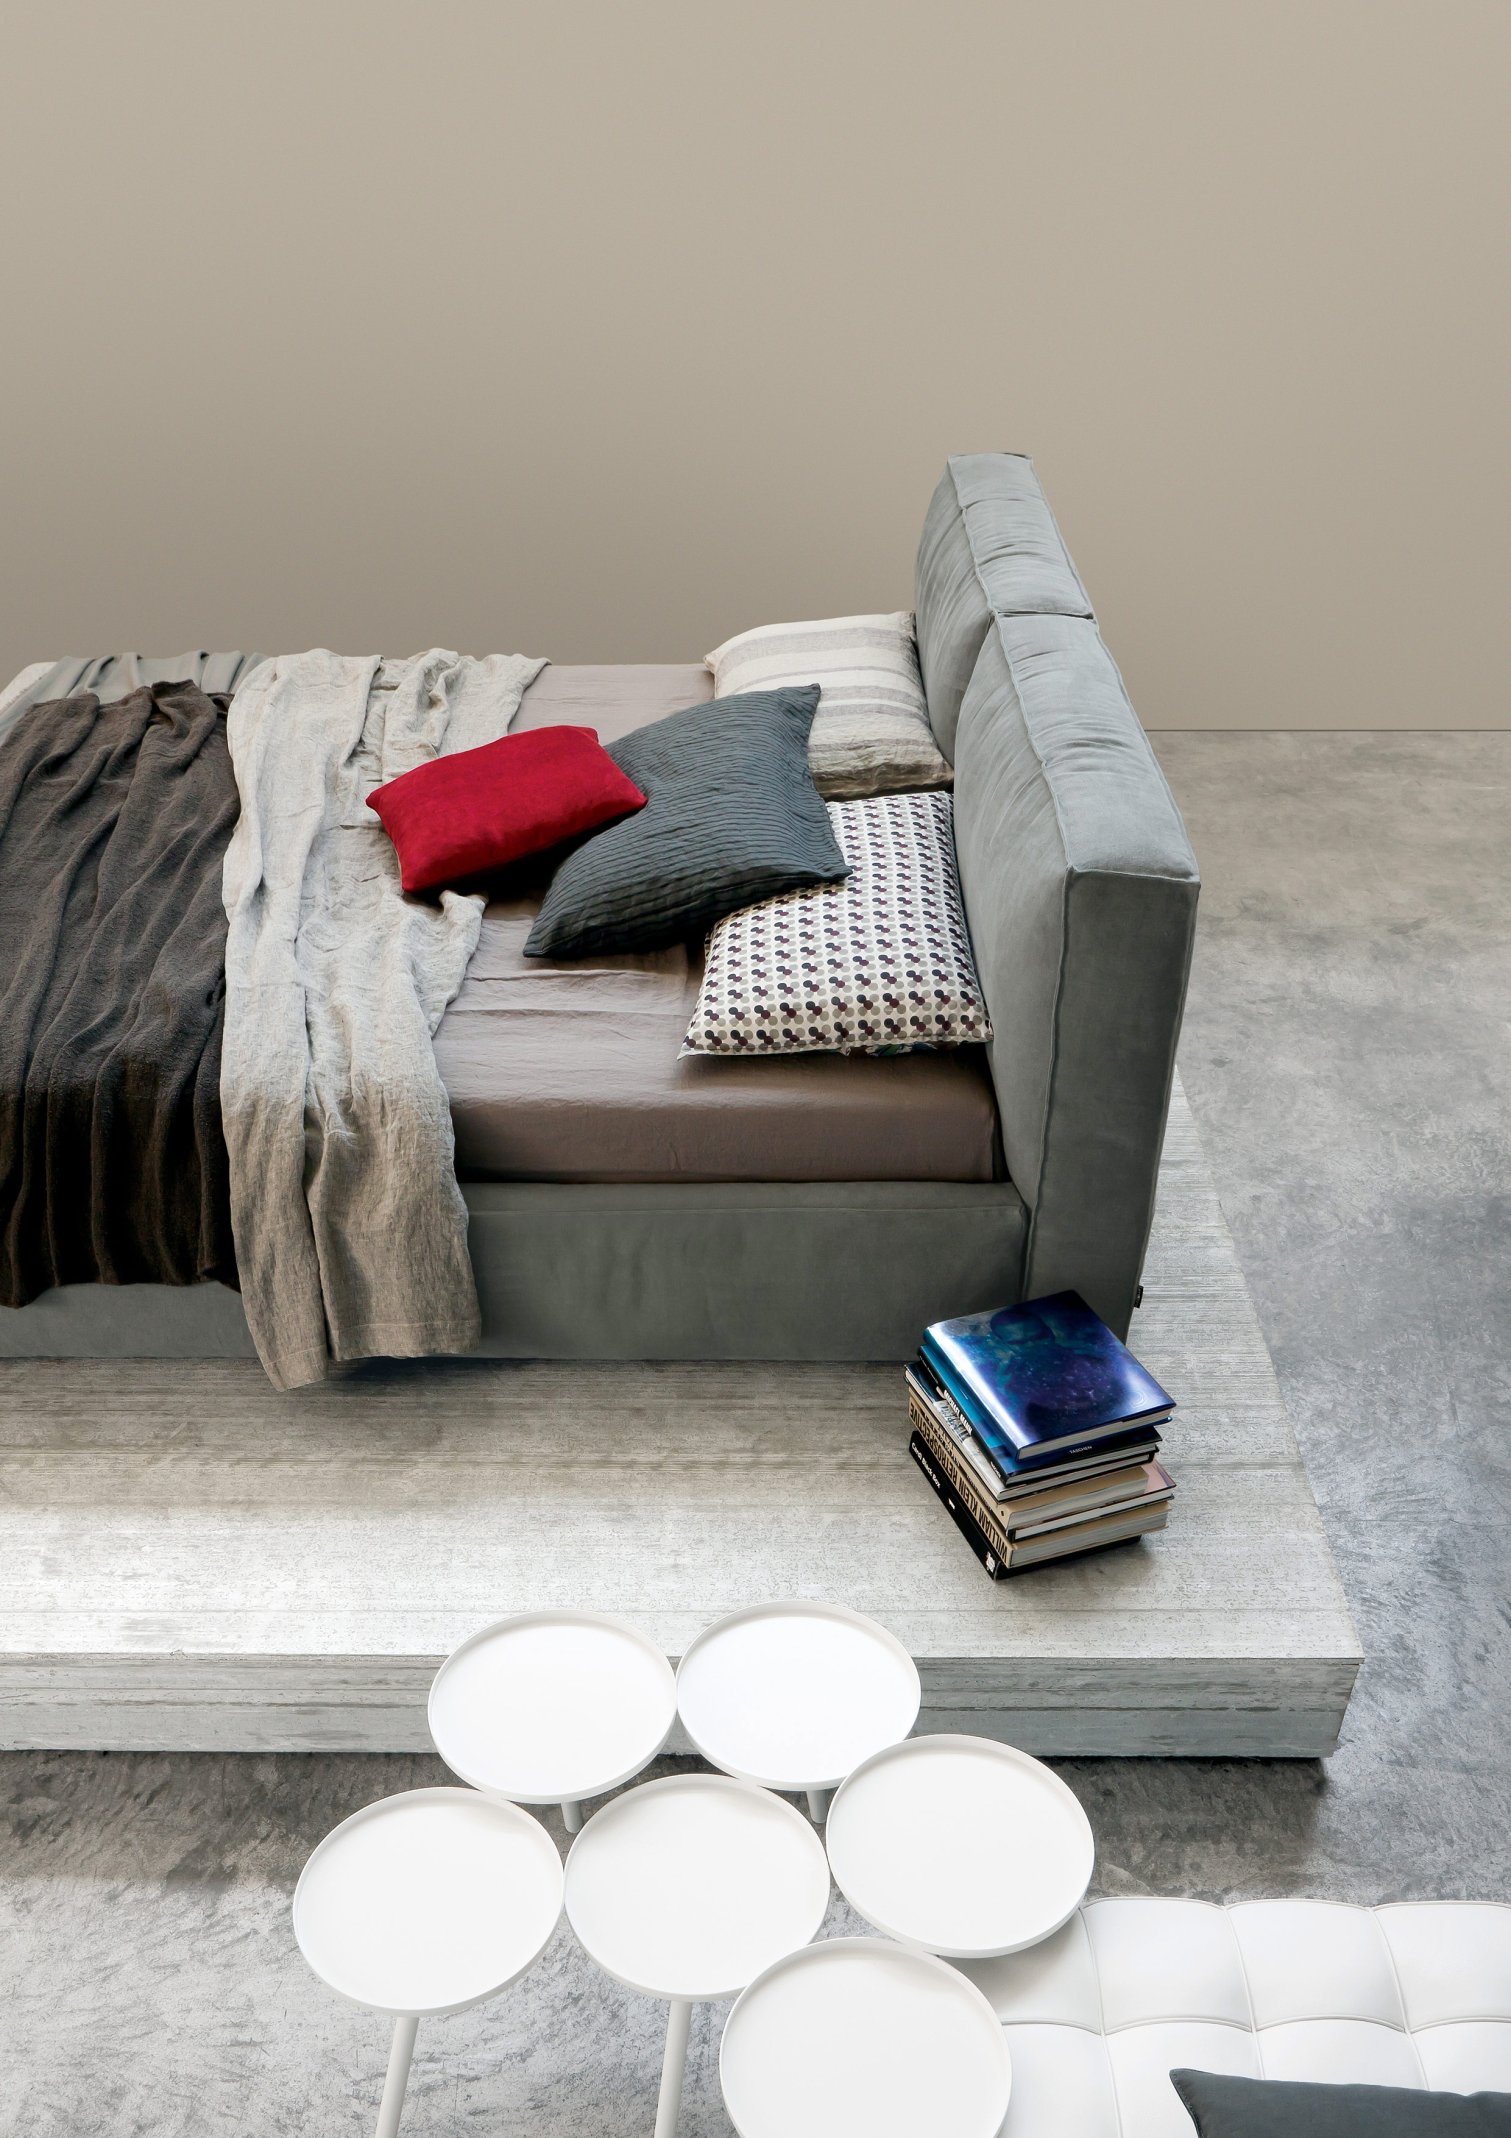 Flexteam, Slim One Bed for mattress 160x200 cm